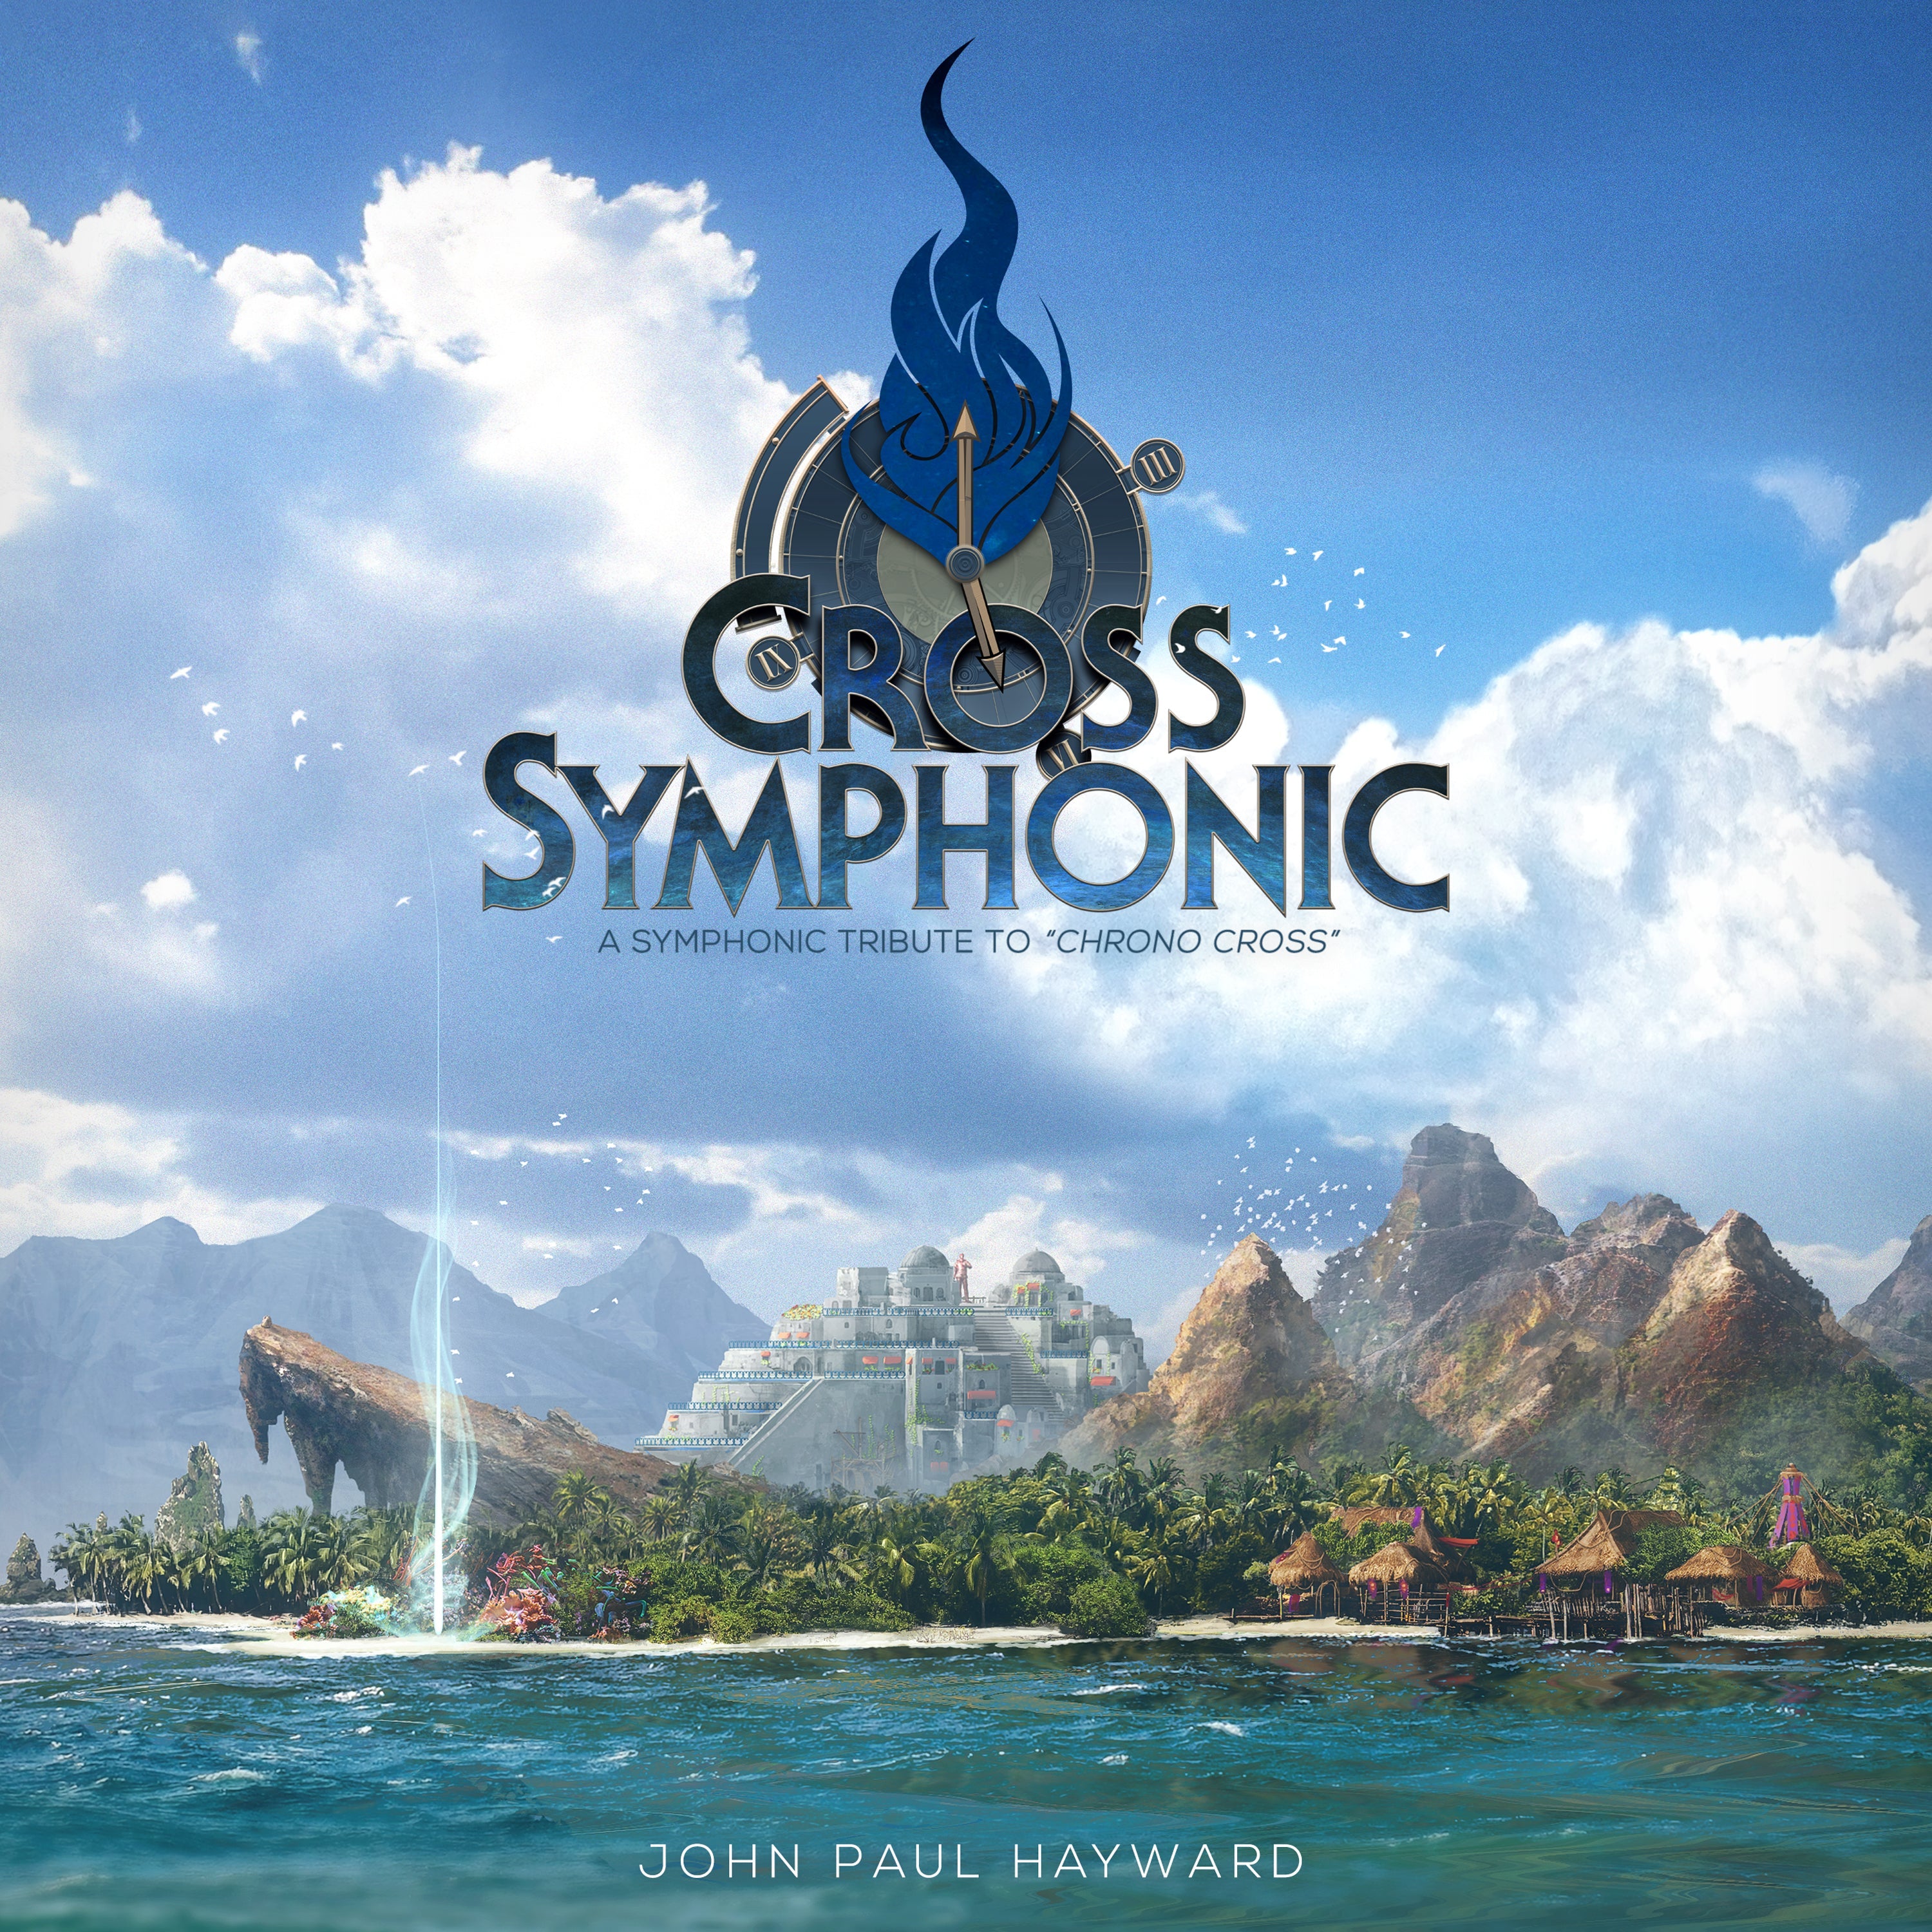 Across the Worlds ~ Chrono Cross Piano (Digital)